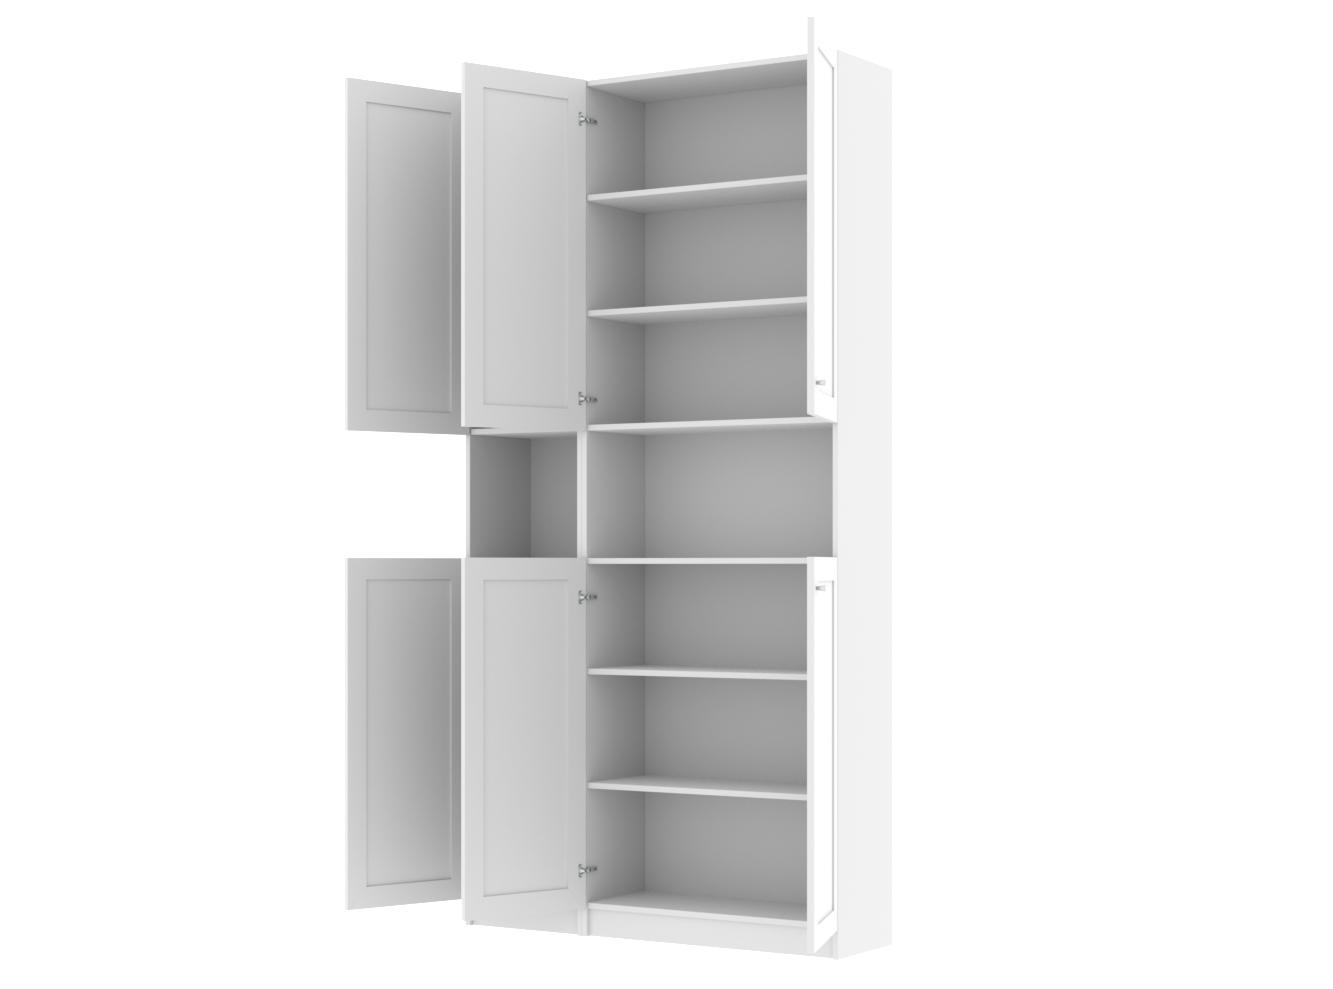  Книжный шкаф Билли 387 white ИКЕА (IKEA) изображение товара